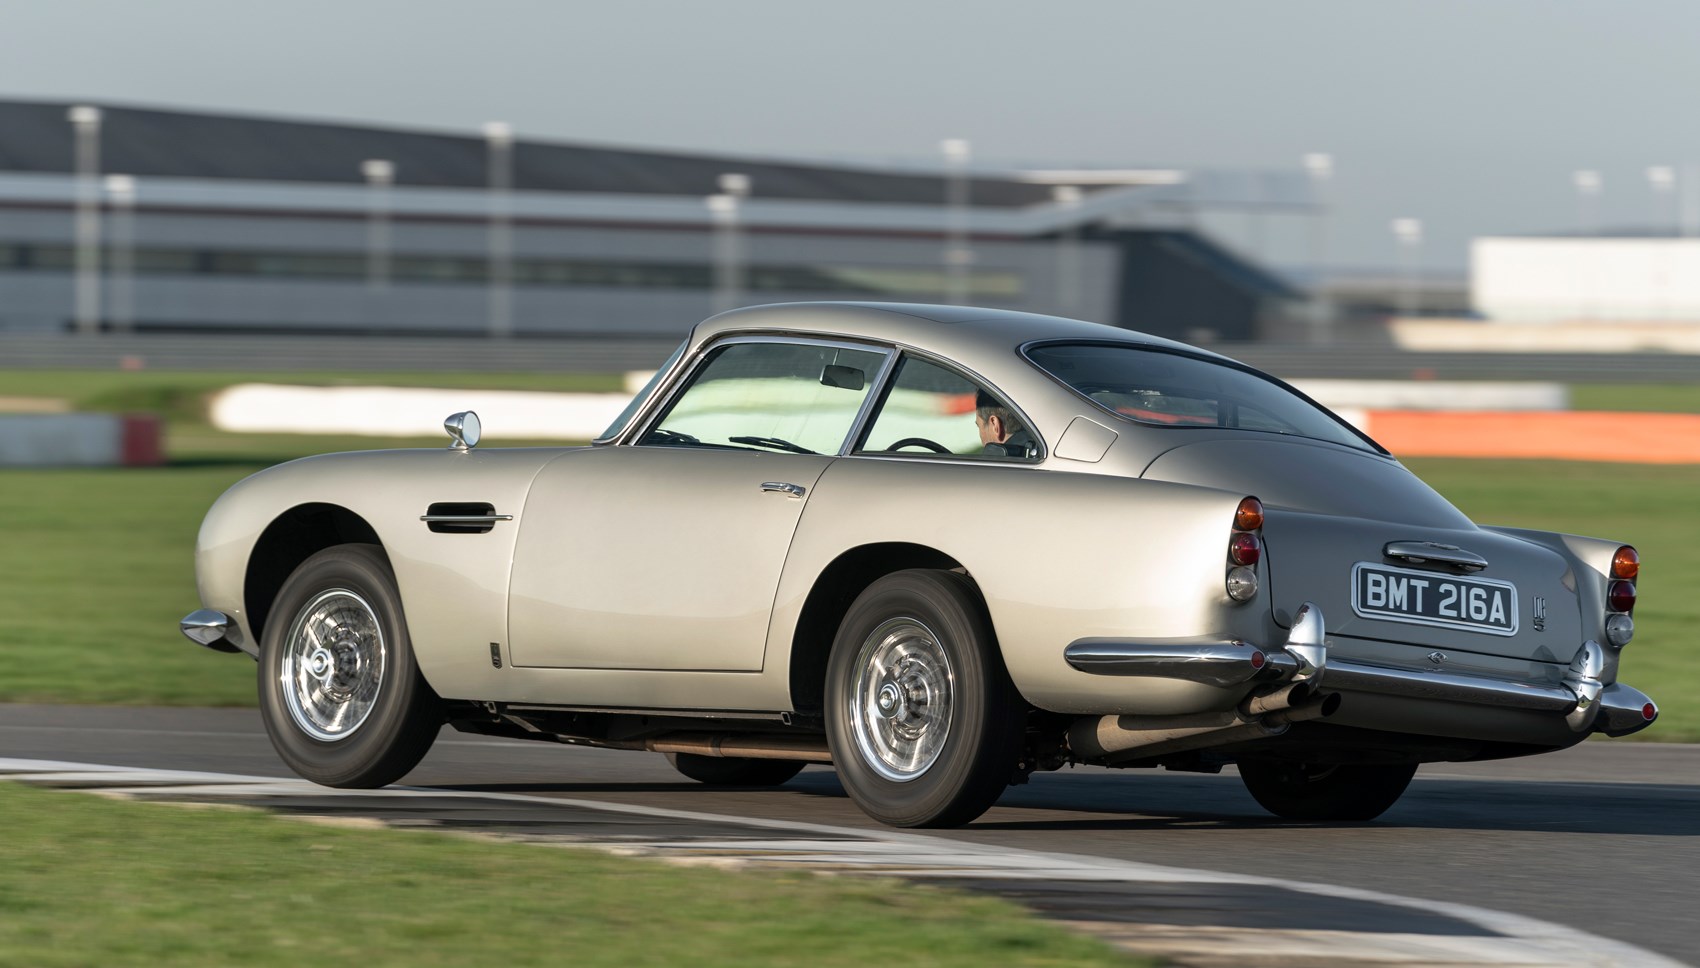 Driving the classics: Aston Martin DB5 review